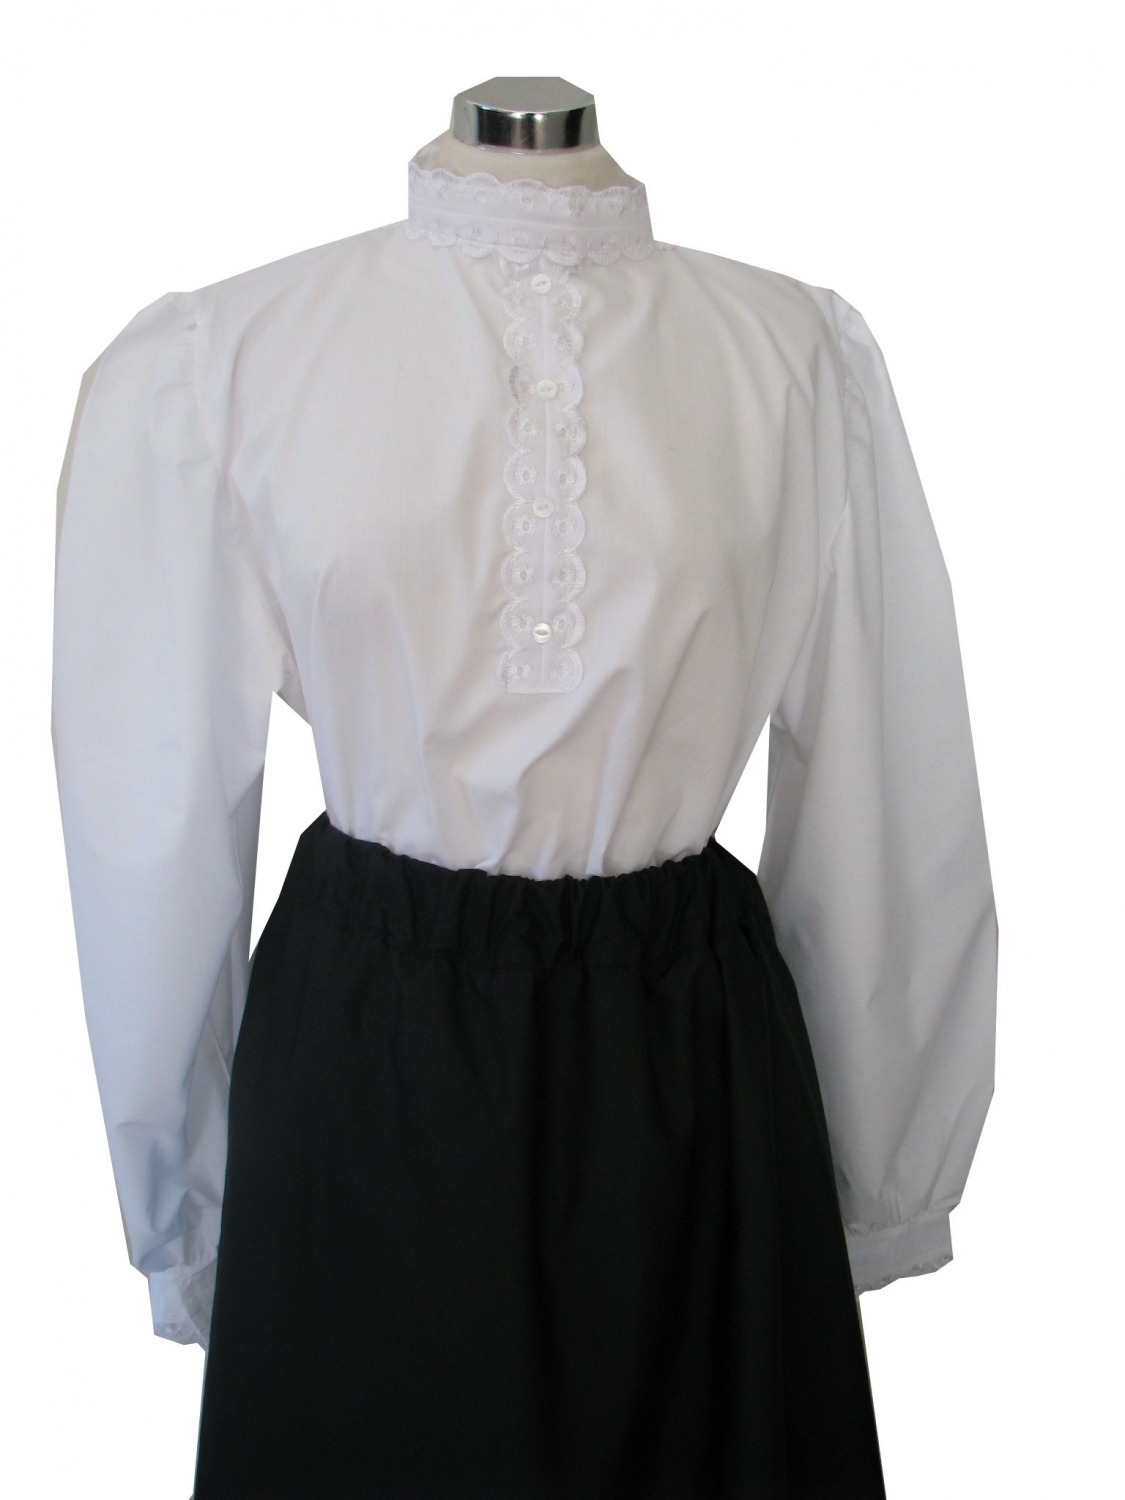 Ladies Victorian School Mistress Costume Edwardian Suffragette Size 20 - 22 Image